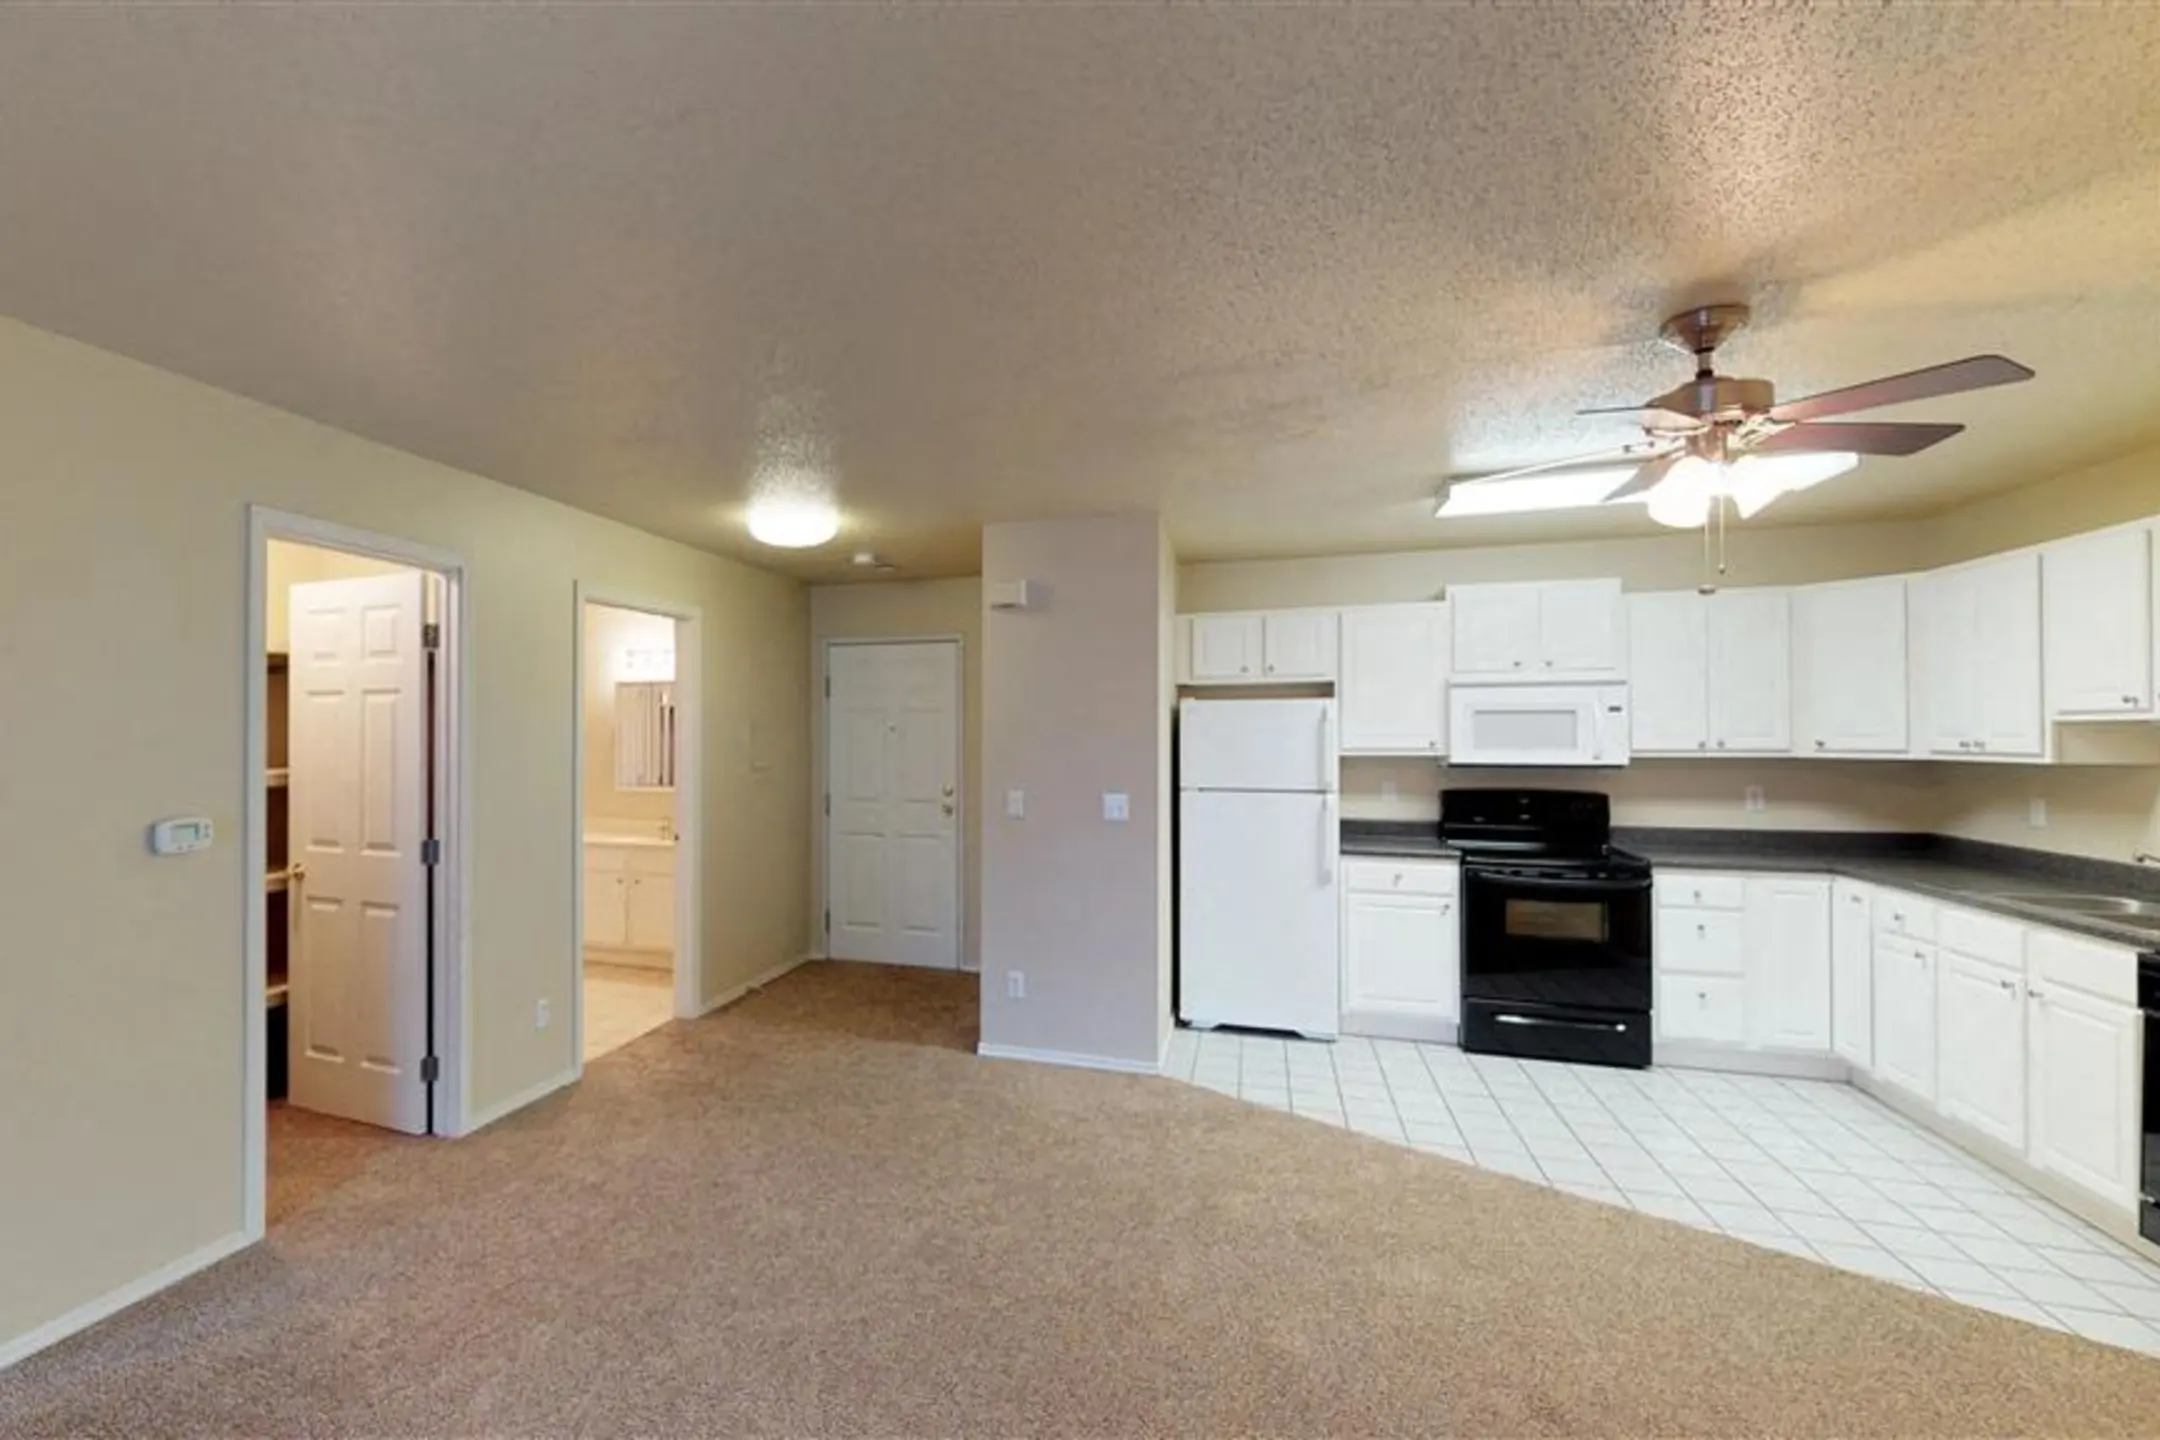 Kitchen - Sierra Vista Apartments - Sioux Falls, SD